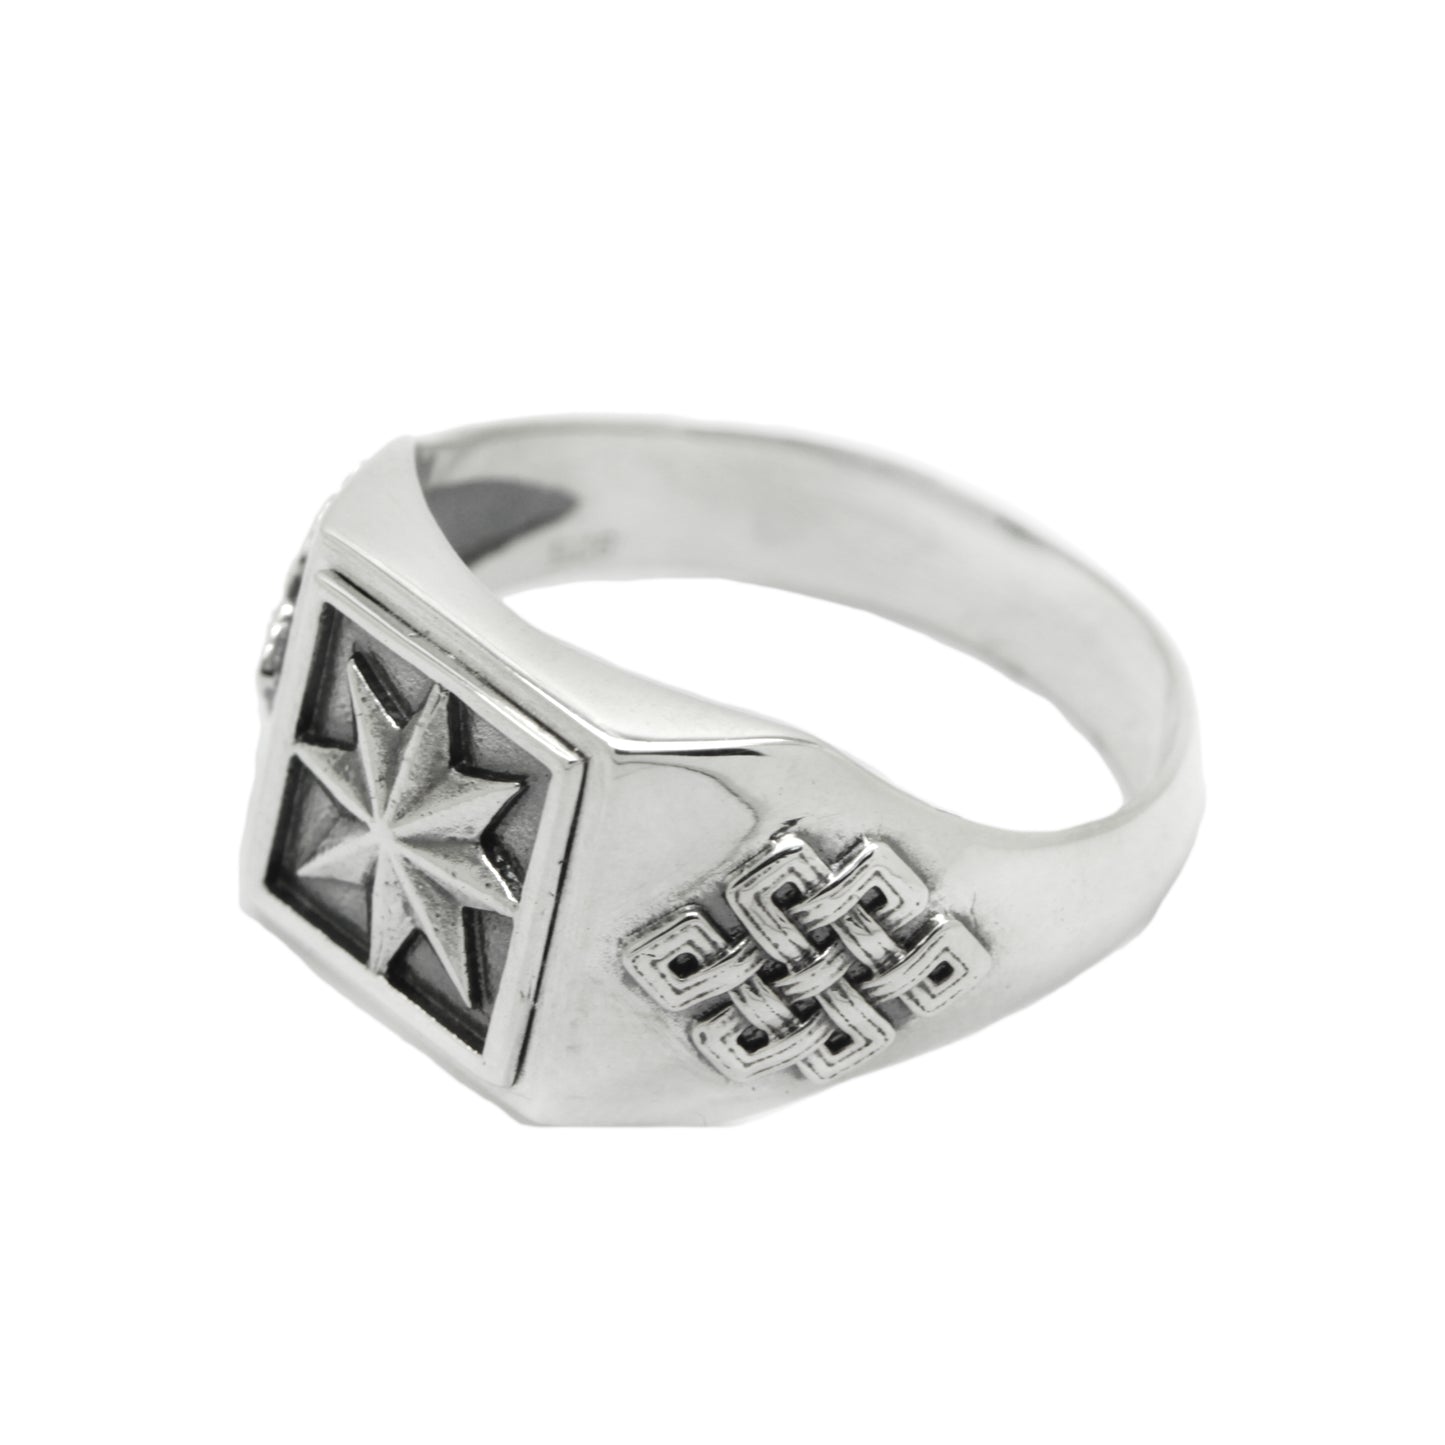 Polaris Star, Celtic Knot Norse Star, Polar Star, Men`s Sterling Silver Ring Signet